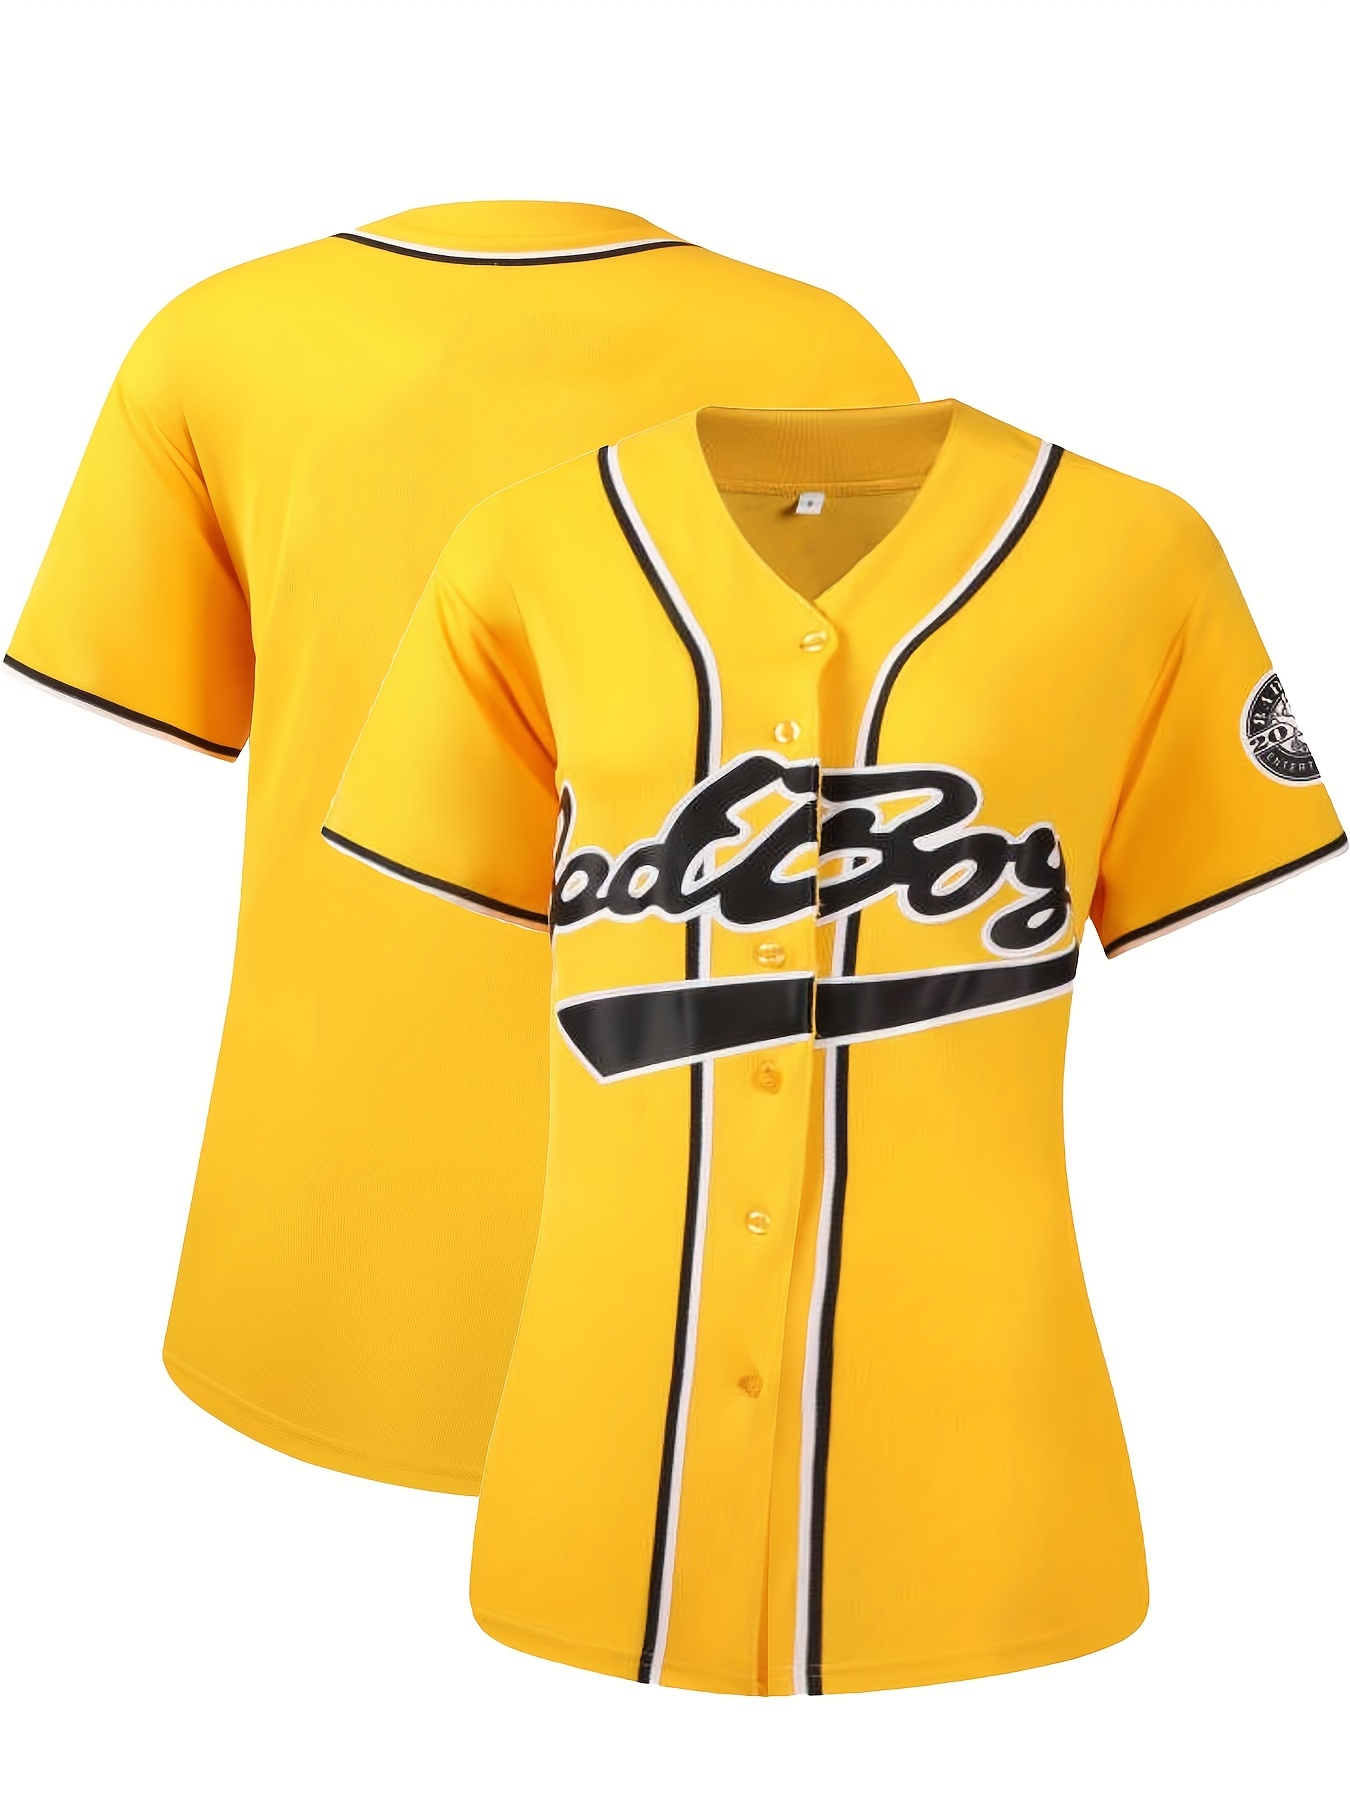 Temu Women'sBadBoy Letter Yellow Baseball Jersey, Letter Printing V-Neck Short Sleeve Sports T-Shirt,Hip Hop Street Art Design Tops for Casual Daily